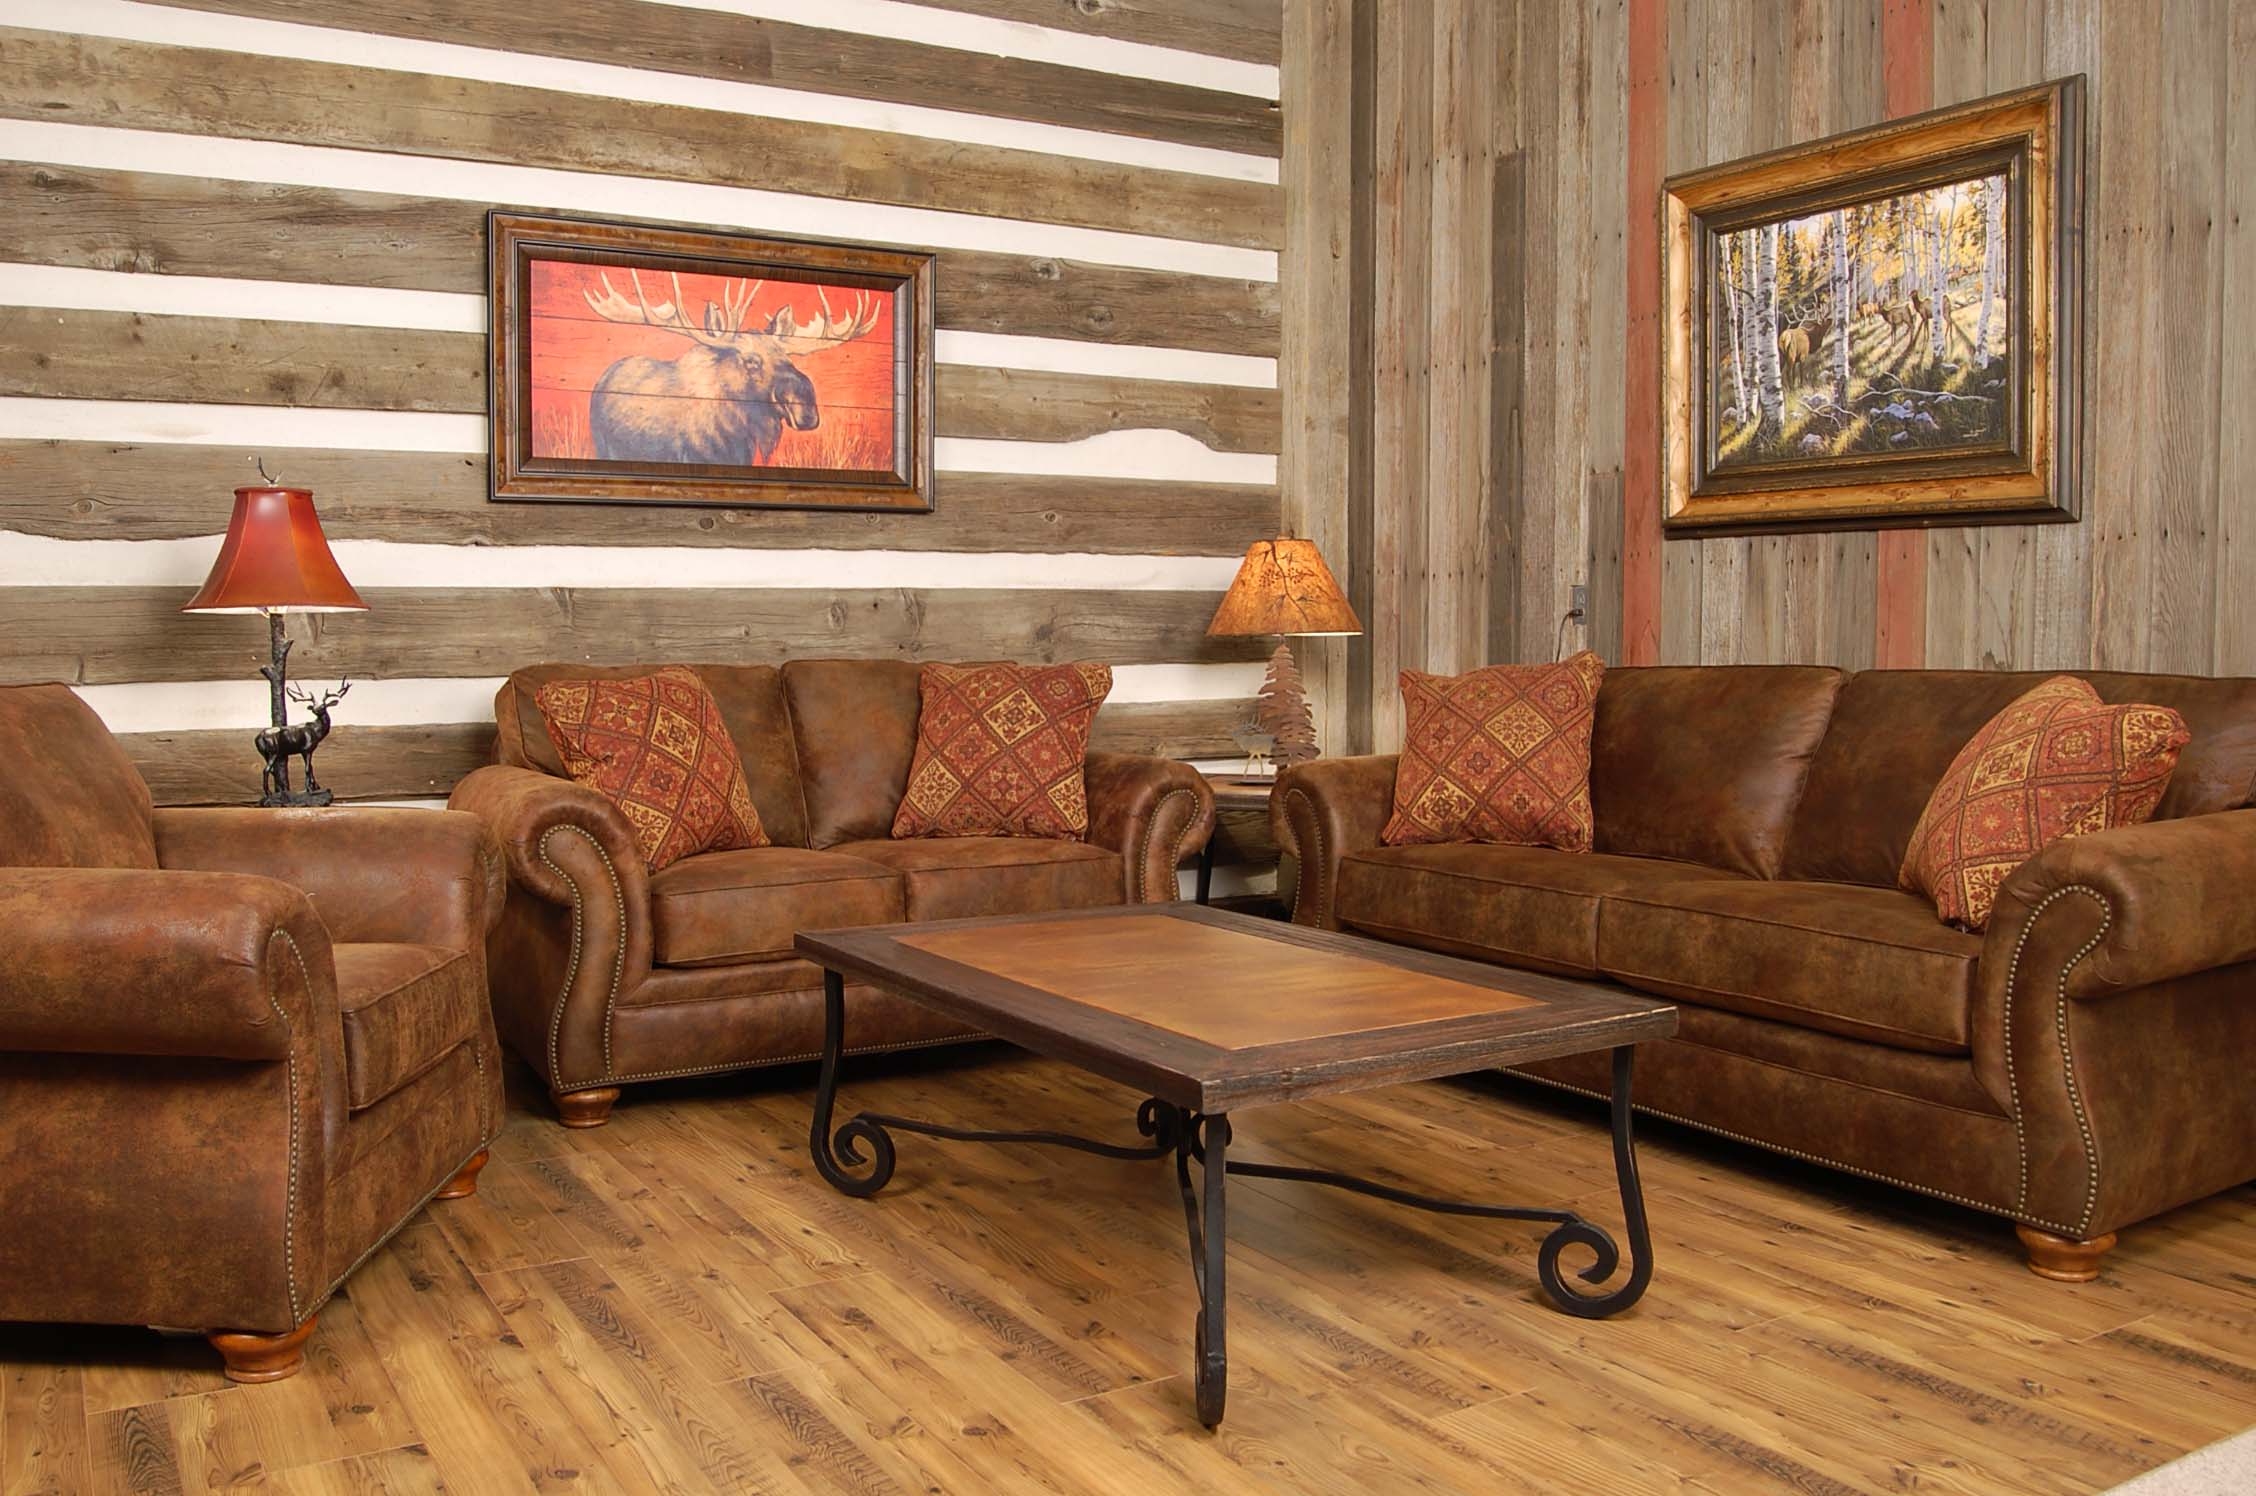 41 Ideas For Design Outstanding Western Theme Living Room Hausratversicherungkosteninfo